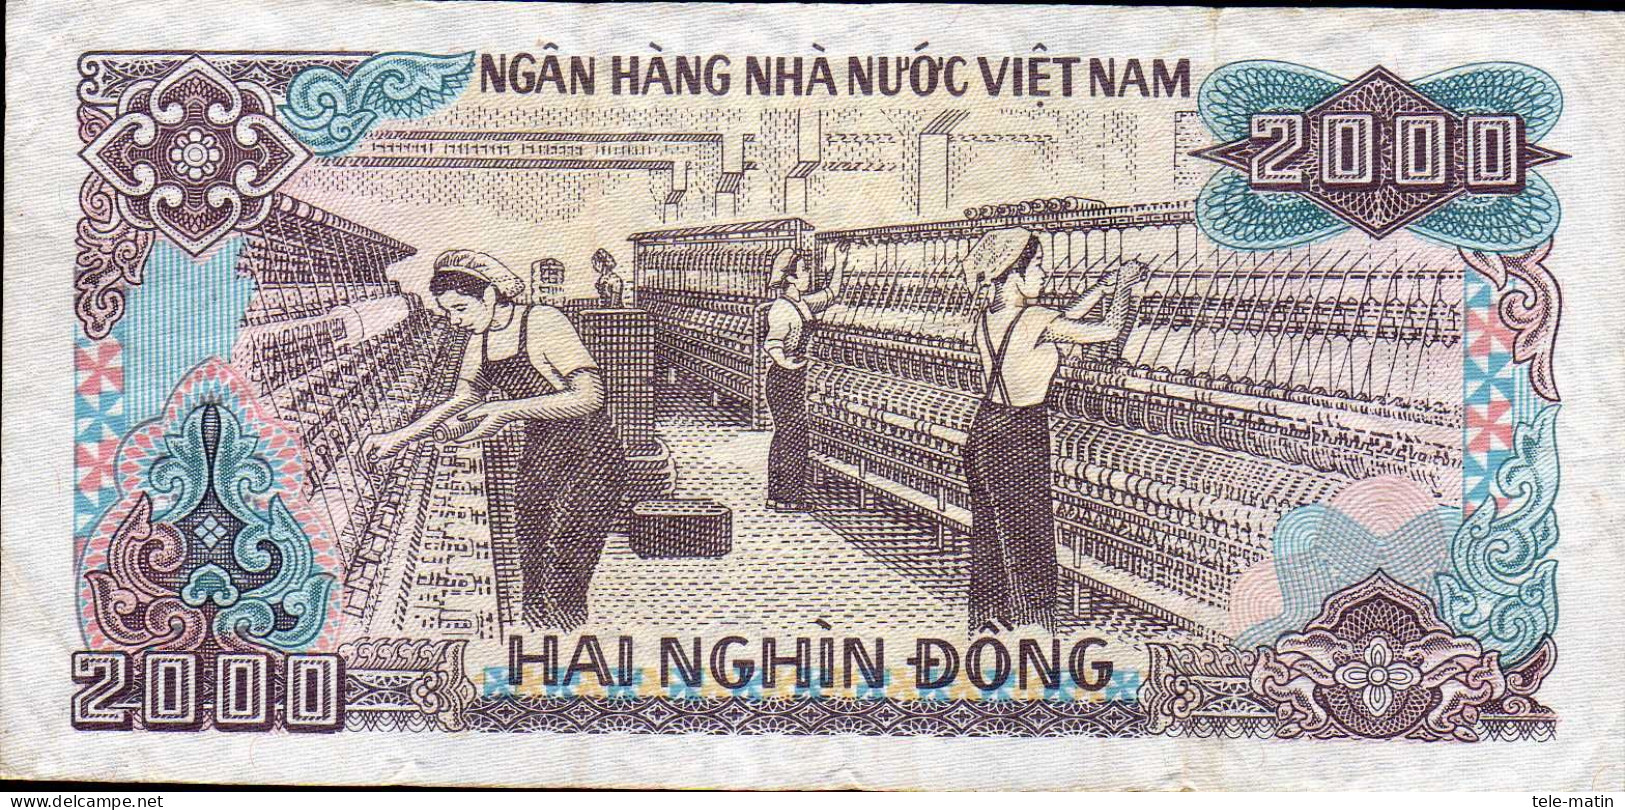 24 billets du Viet-Nam